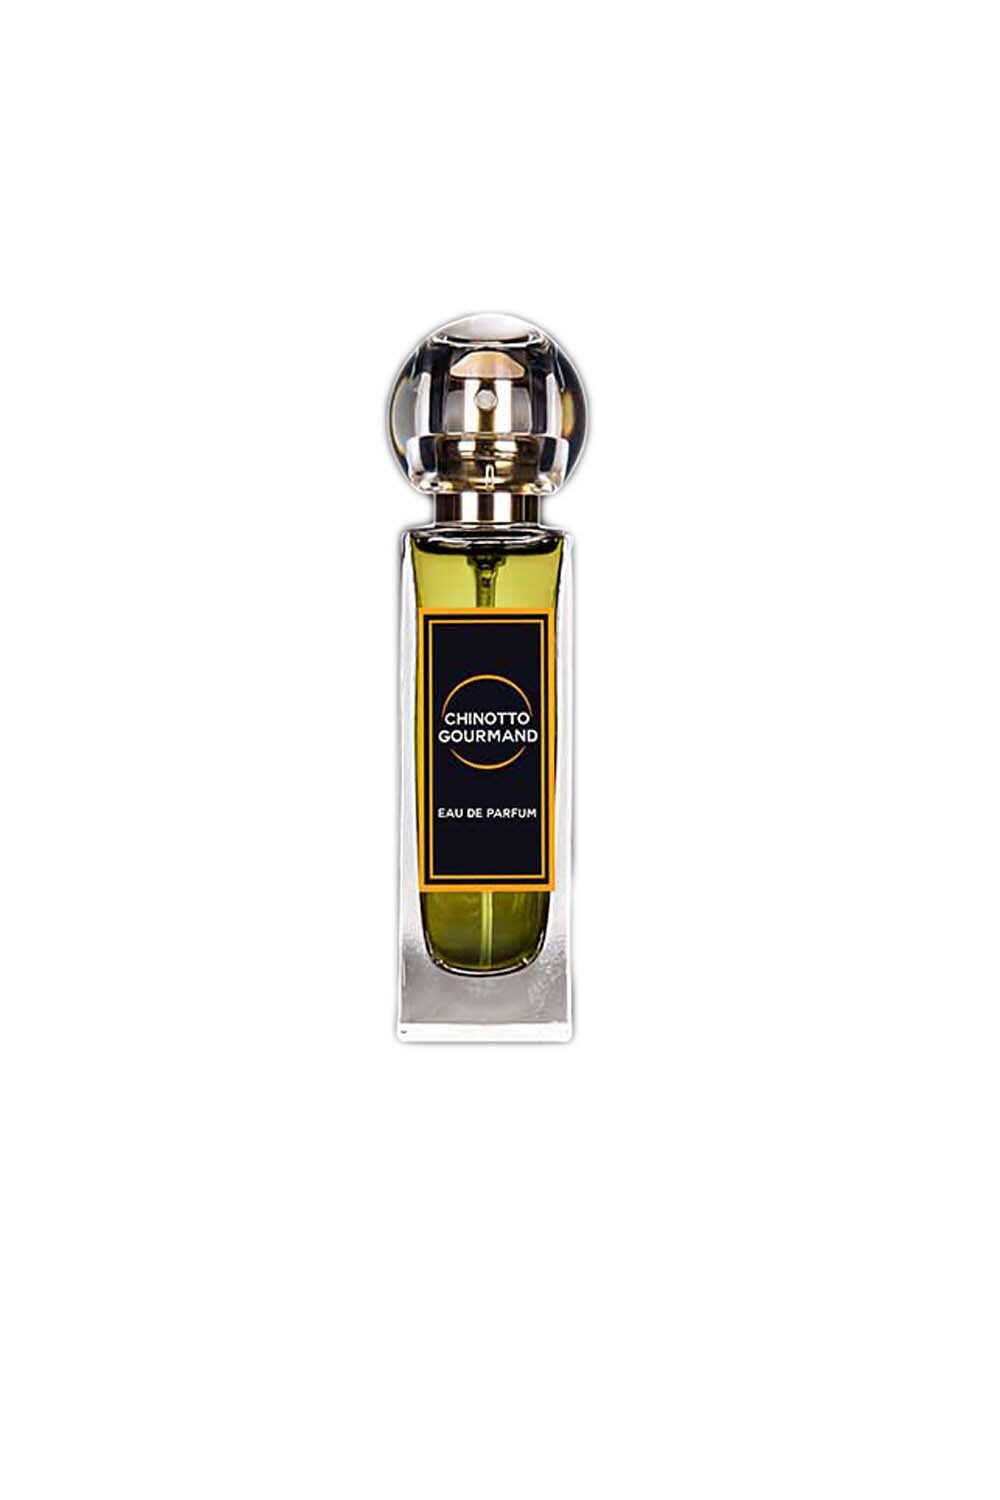 Petulance Thespian Lounge Chinotto Gourmand Eau de Parfum 30ml — Atelier D'Emotion